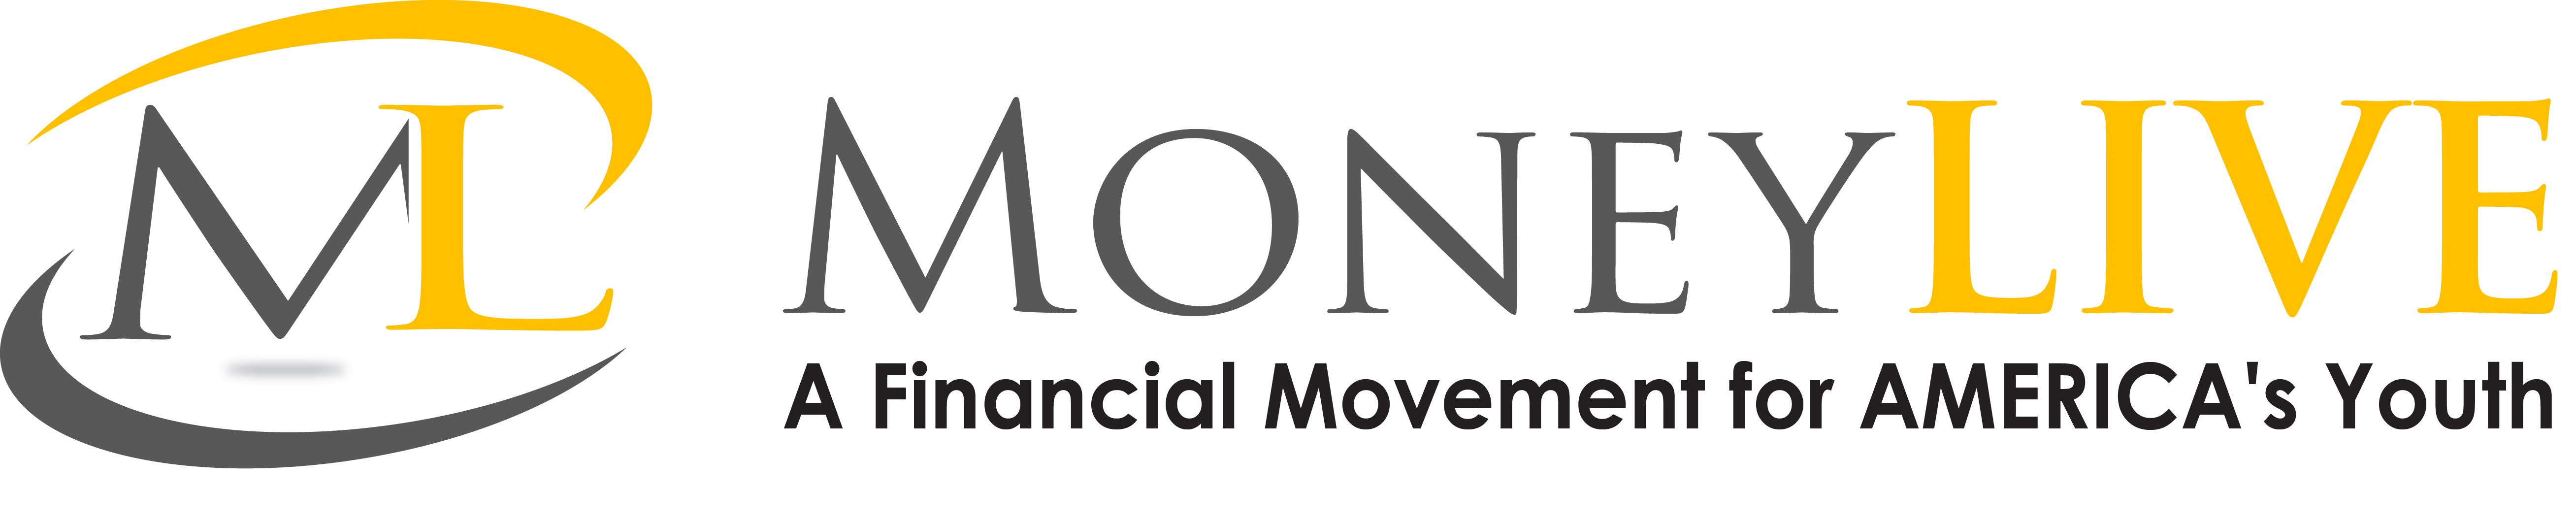 MoneyLIVE logo